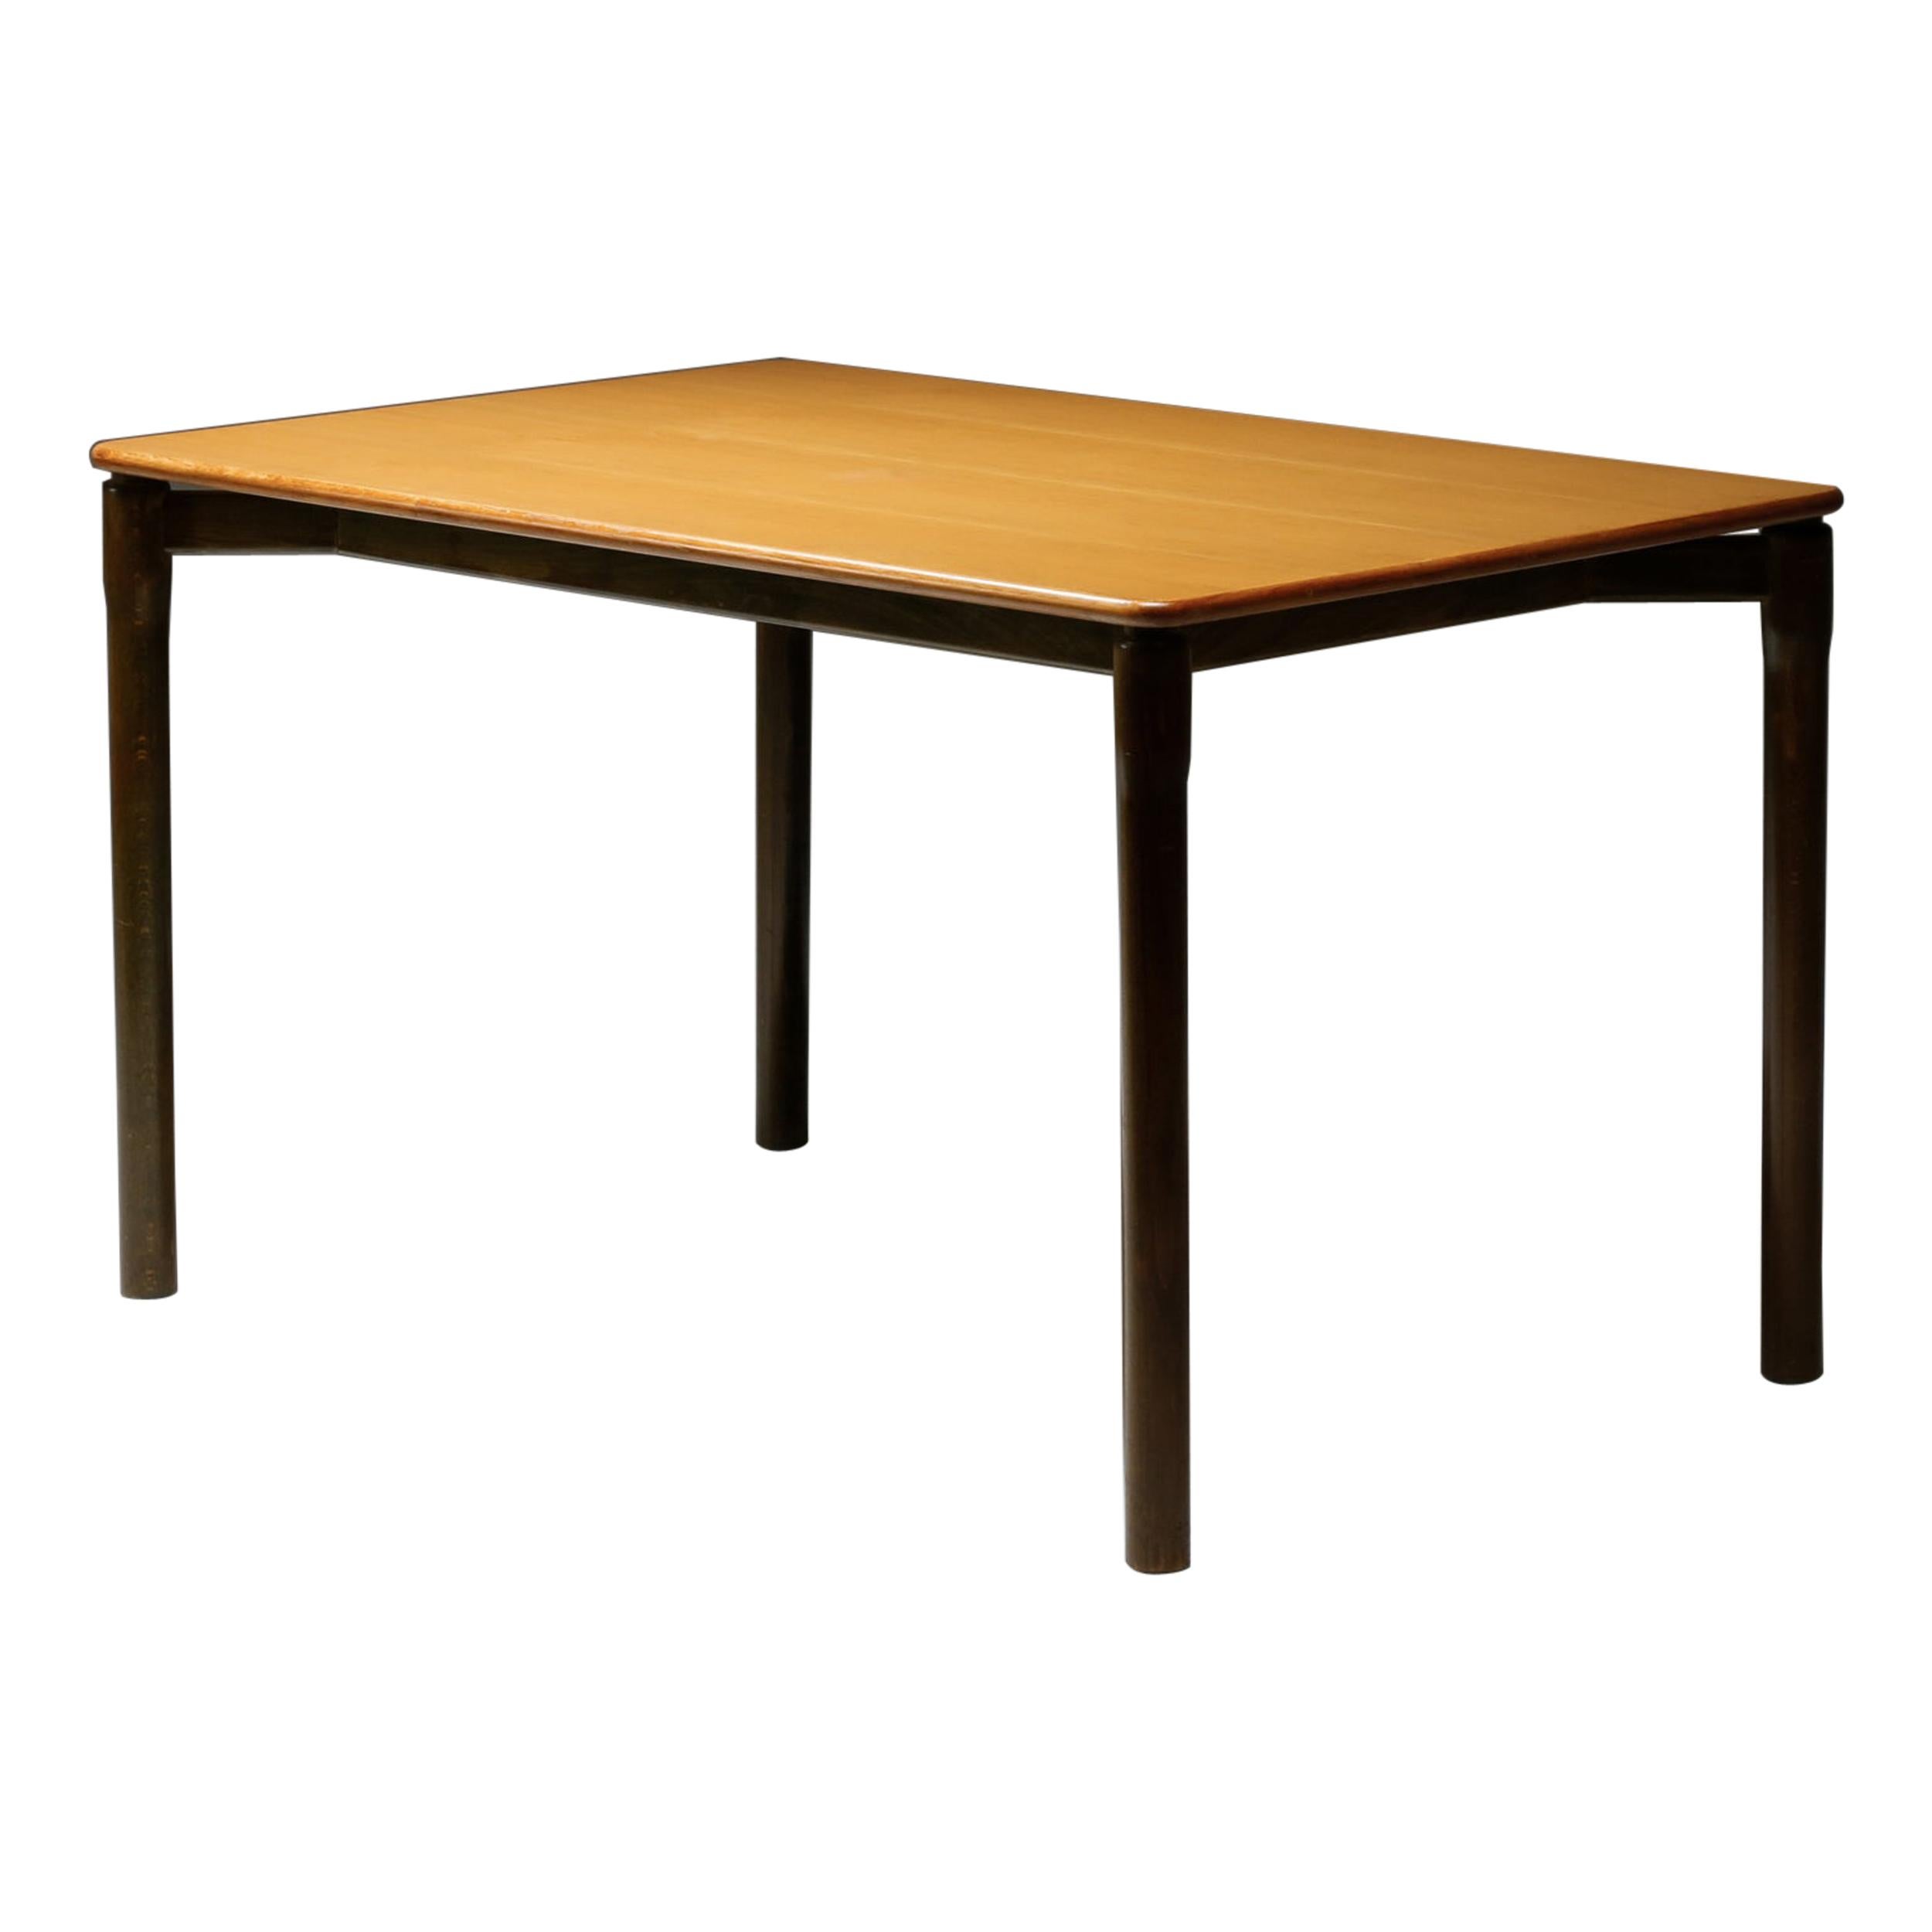 Vico Magistretti Carimate Table Set for Cassina, Italian Design